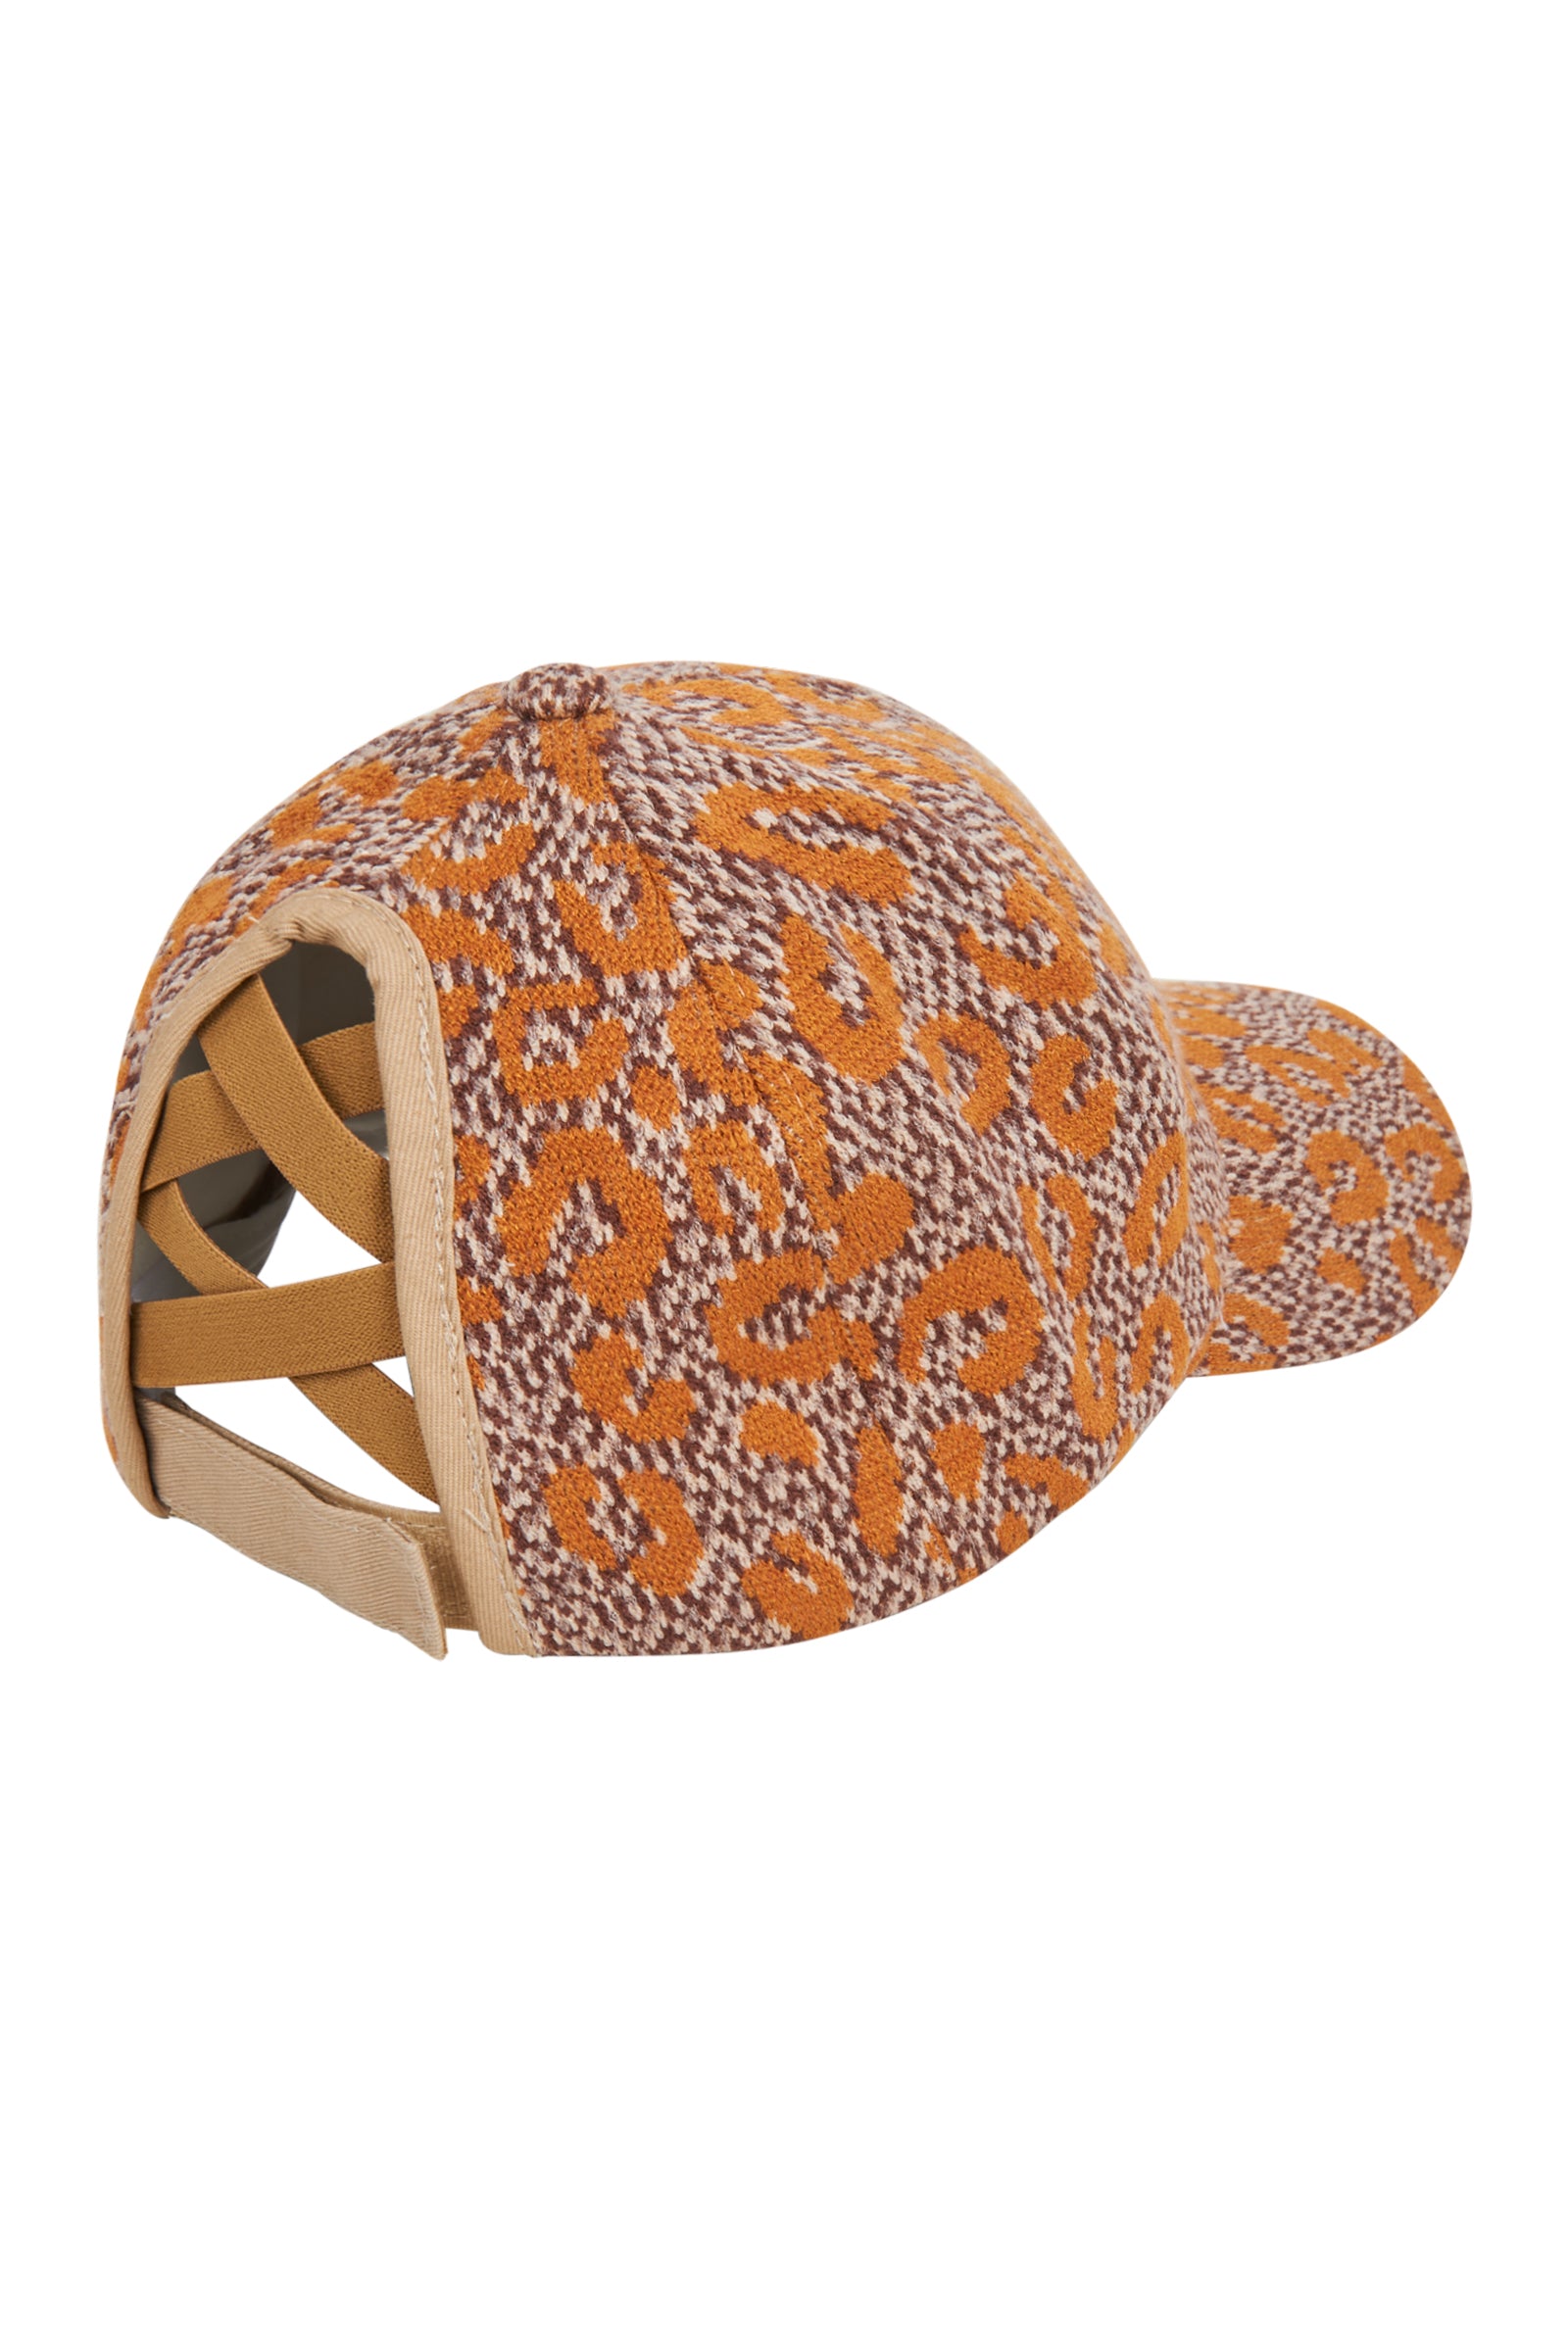 Pilbara Cap - Ochre - eb&ive Hat